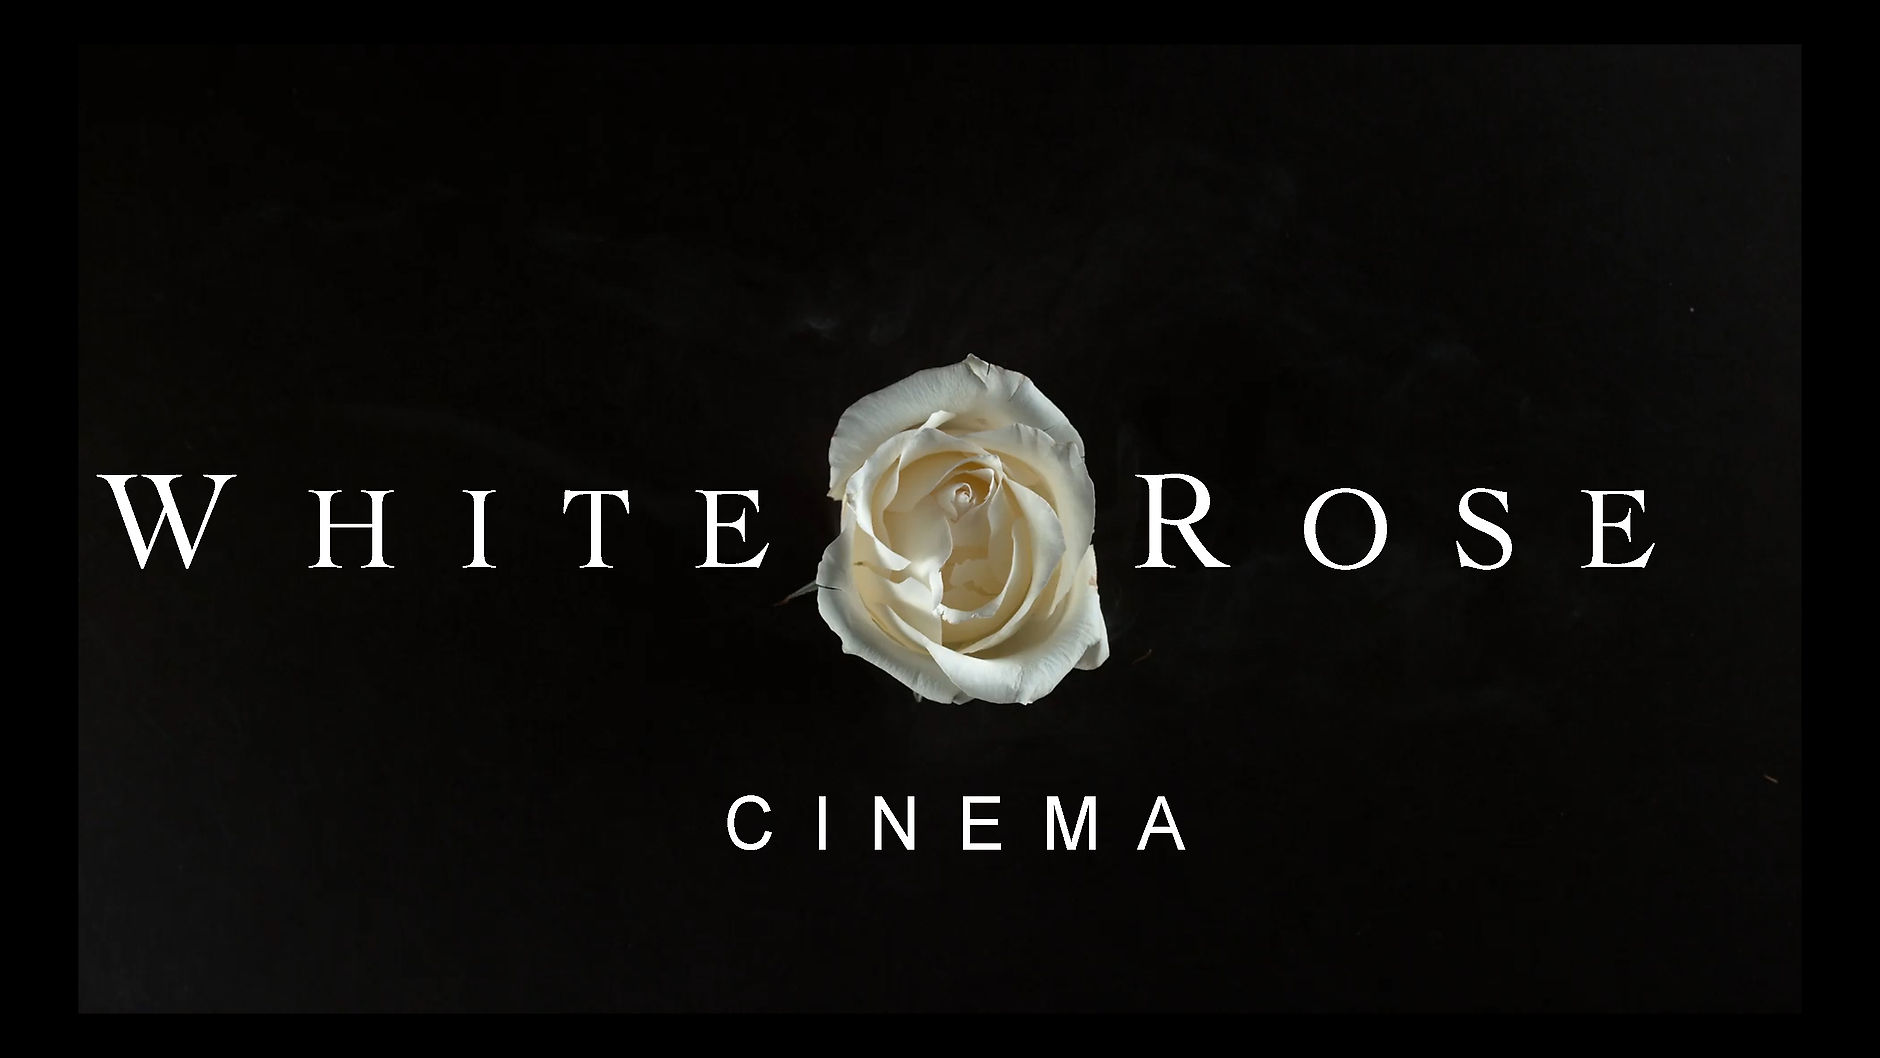 WHITE ROSE CINEMA GALLERY